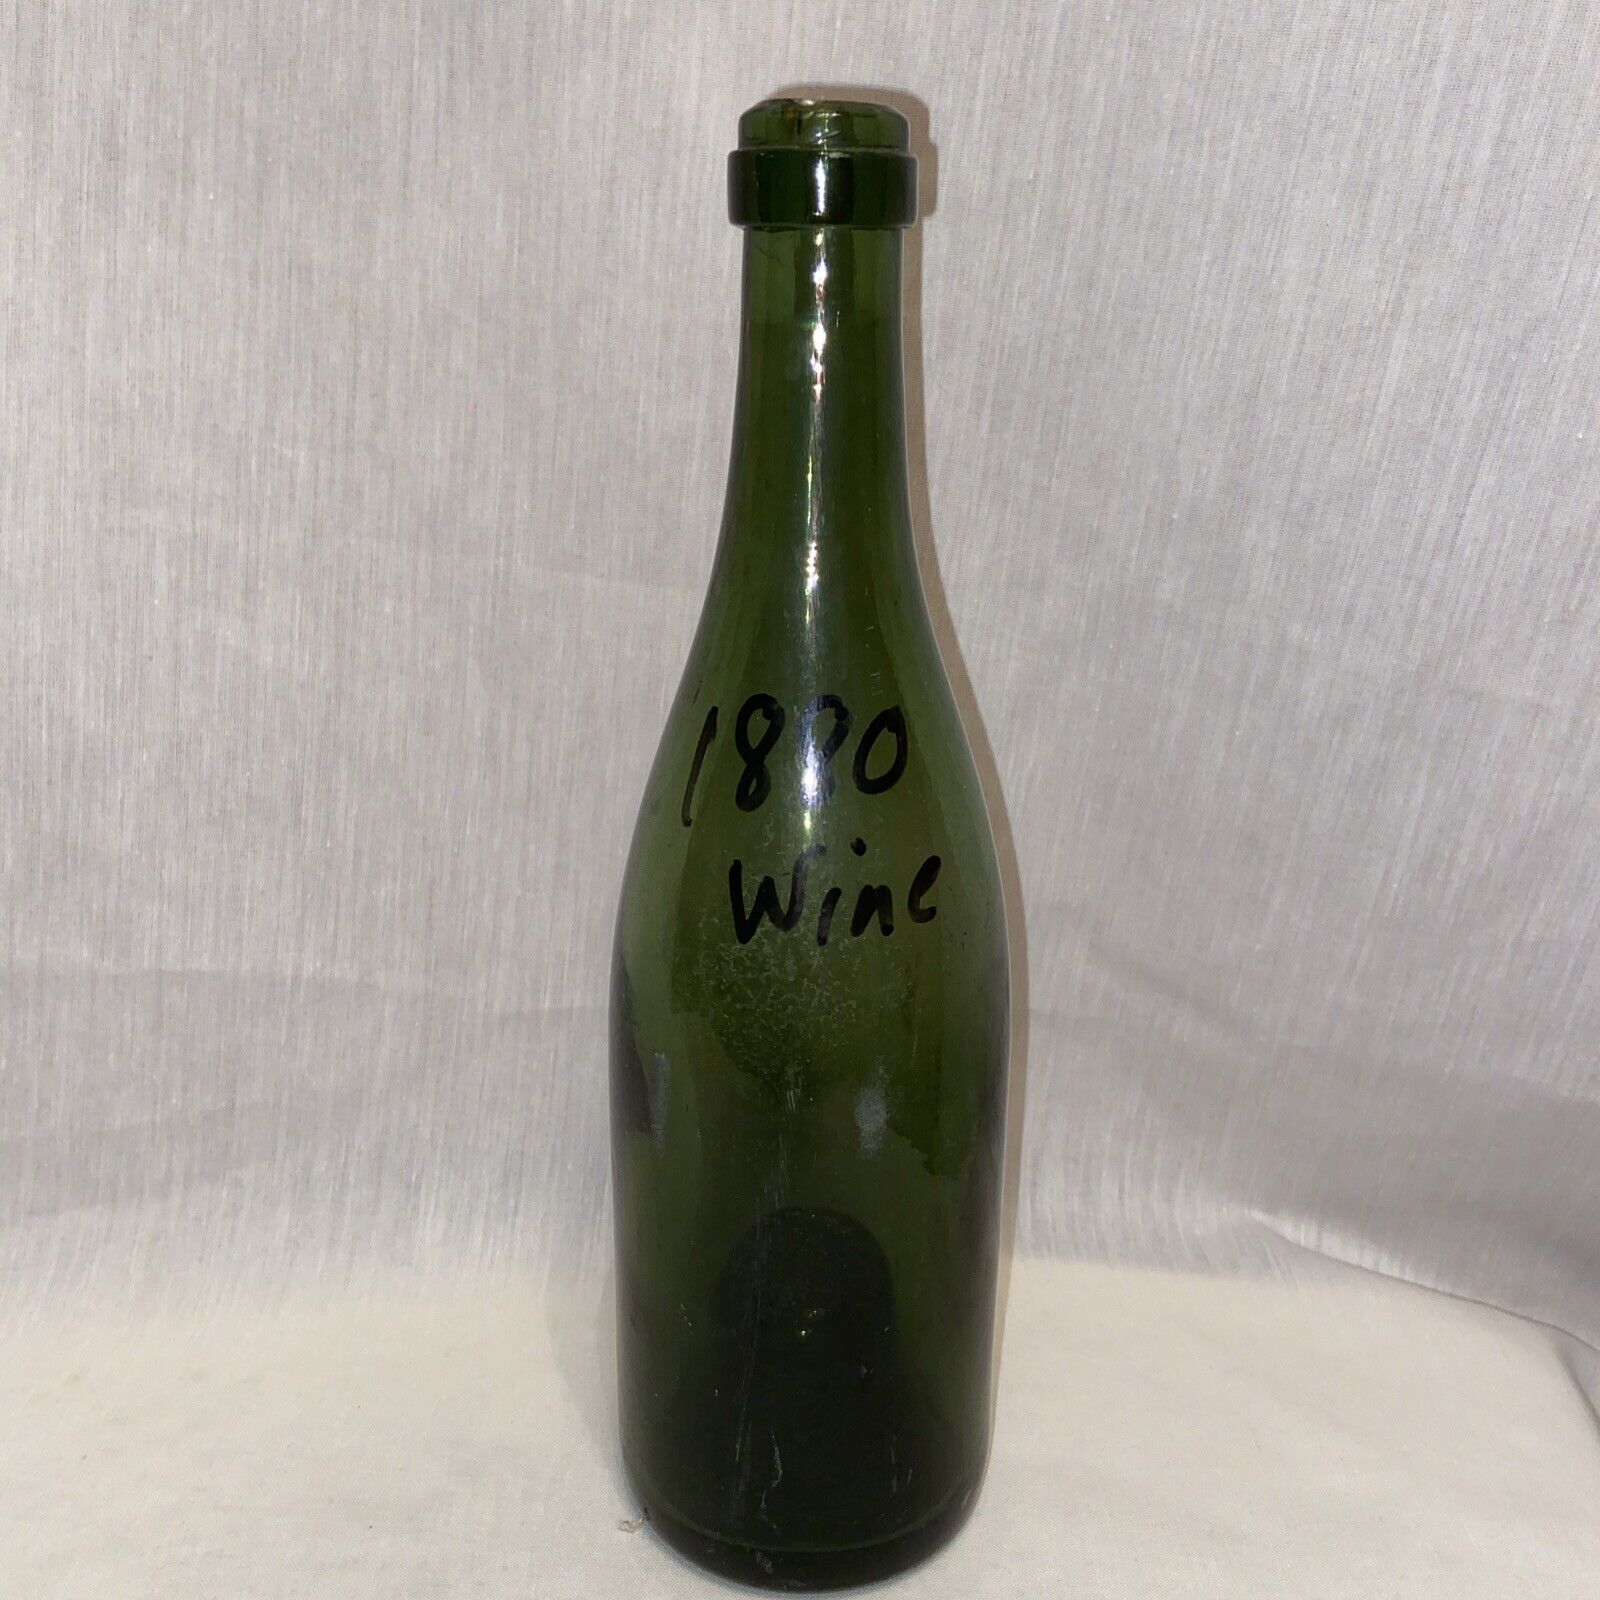 Green ANTIQUE BOTTLE wine Century glass vintage 1880